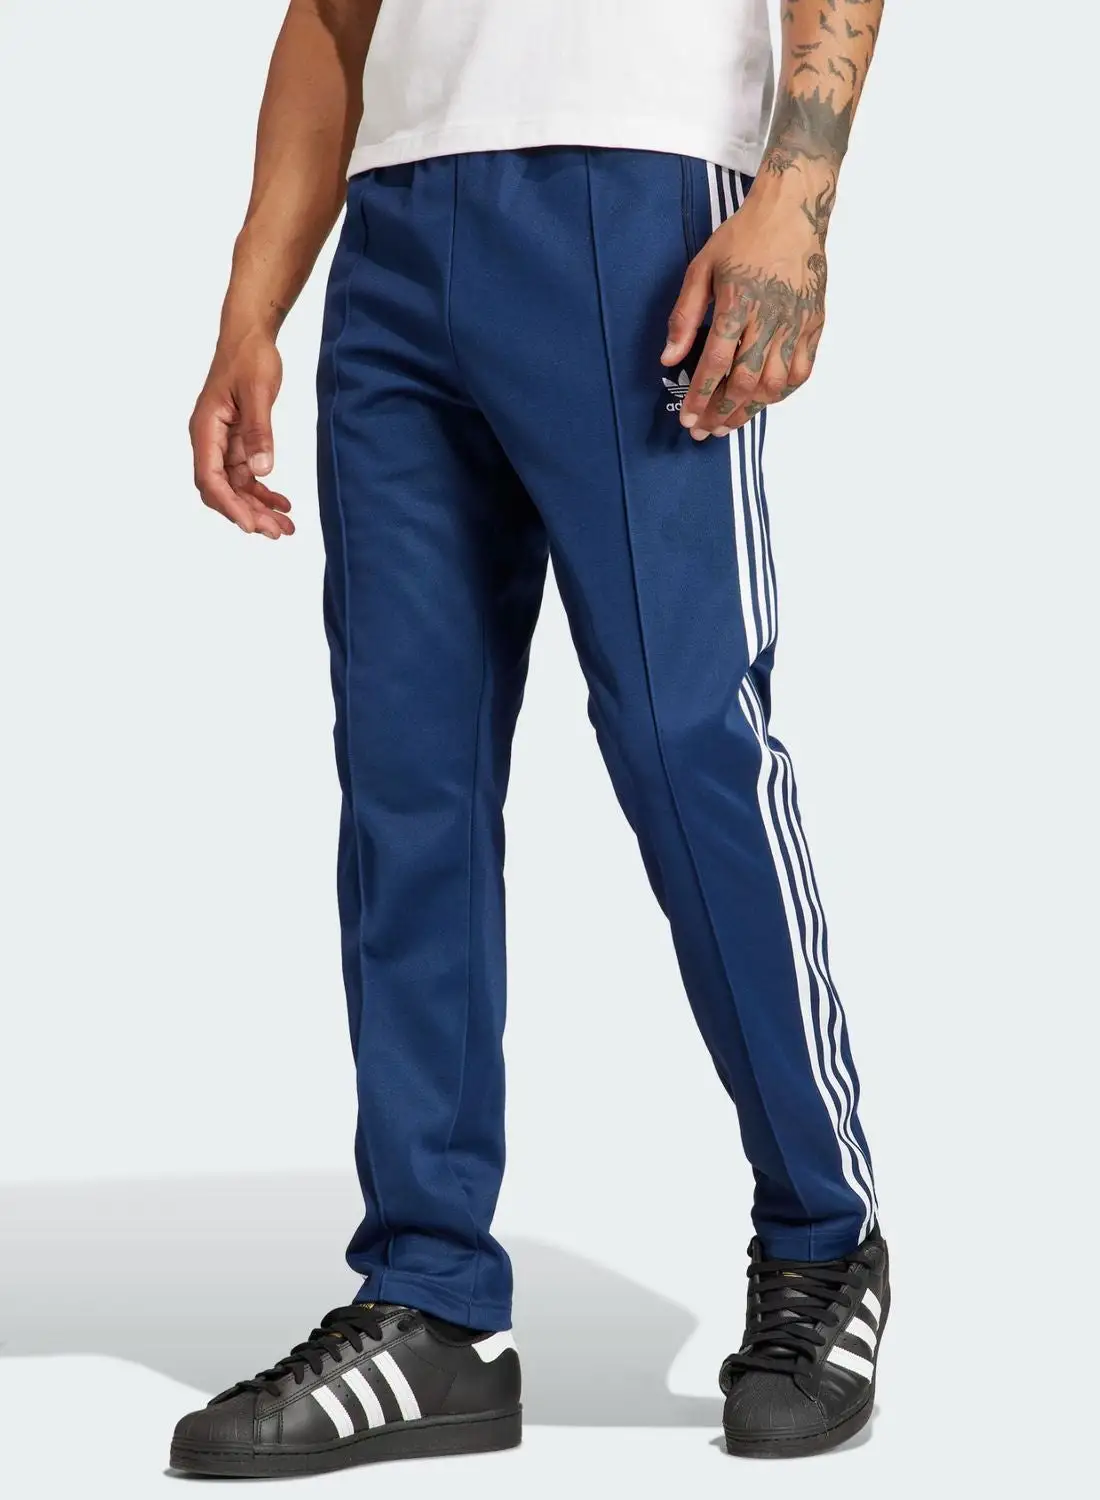 adidas Originals Beckenbauer Track Pants